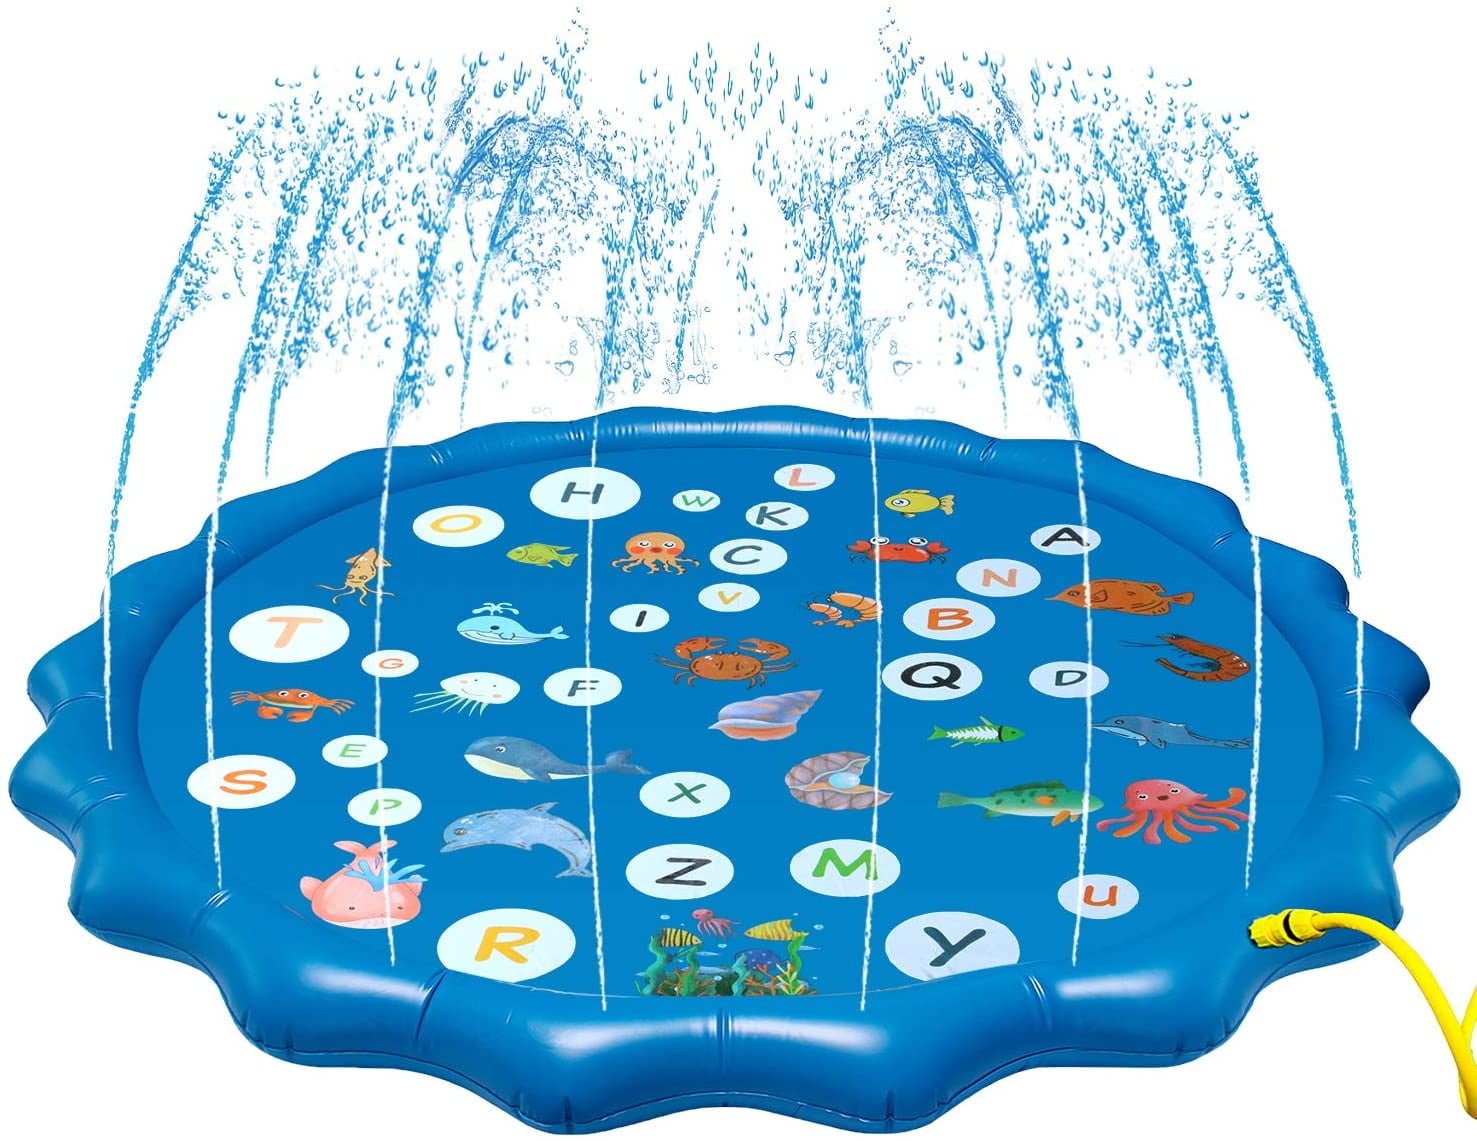 Details about   Large Kids Inflatable Water Spray Pad Sprinkler Mat Round Water Splash Play Pool 